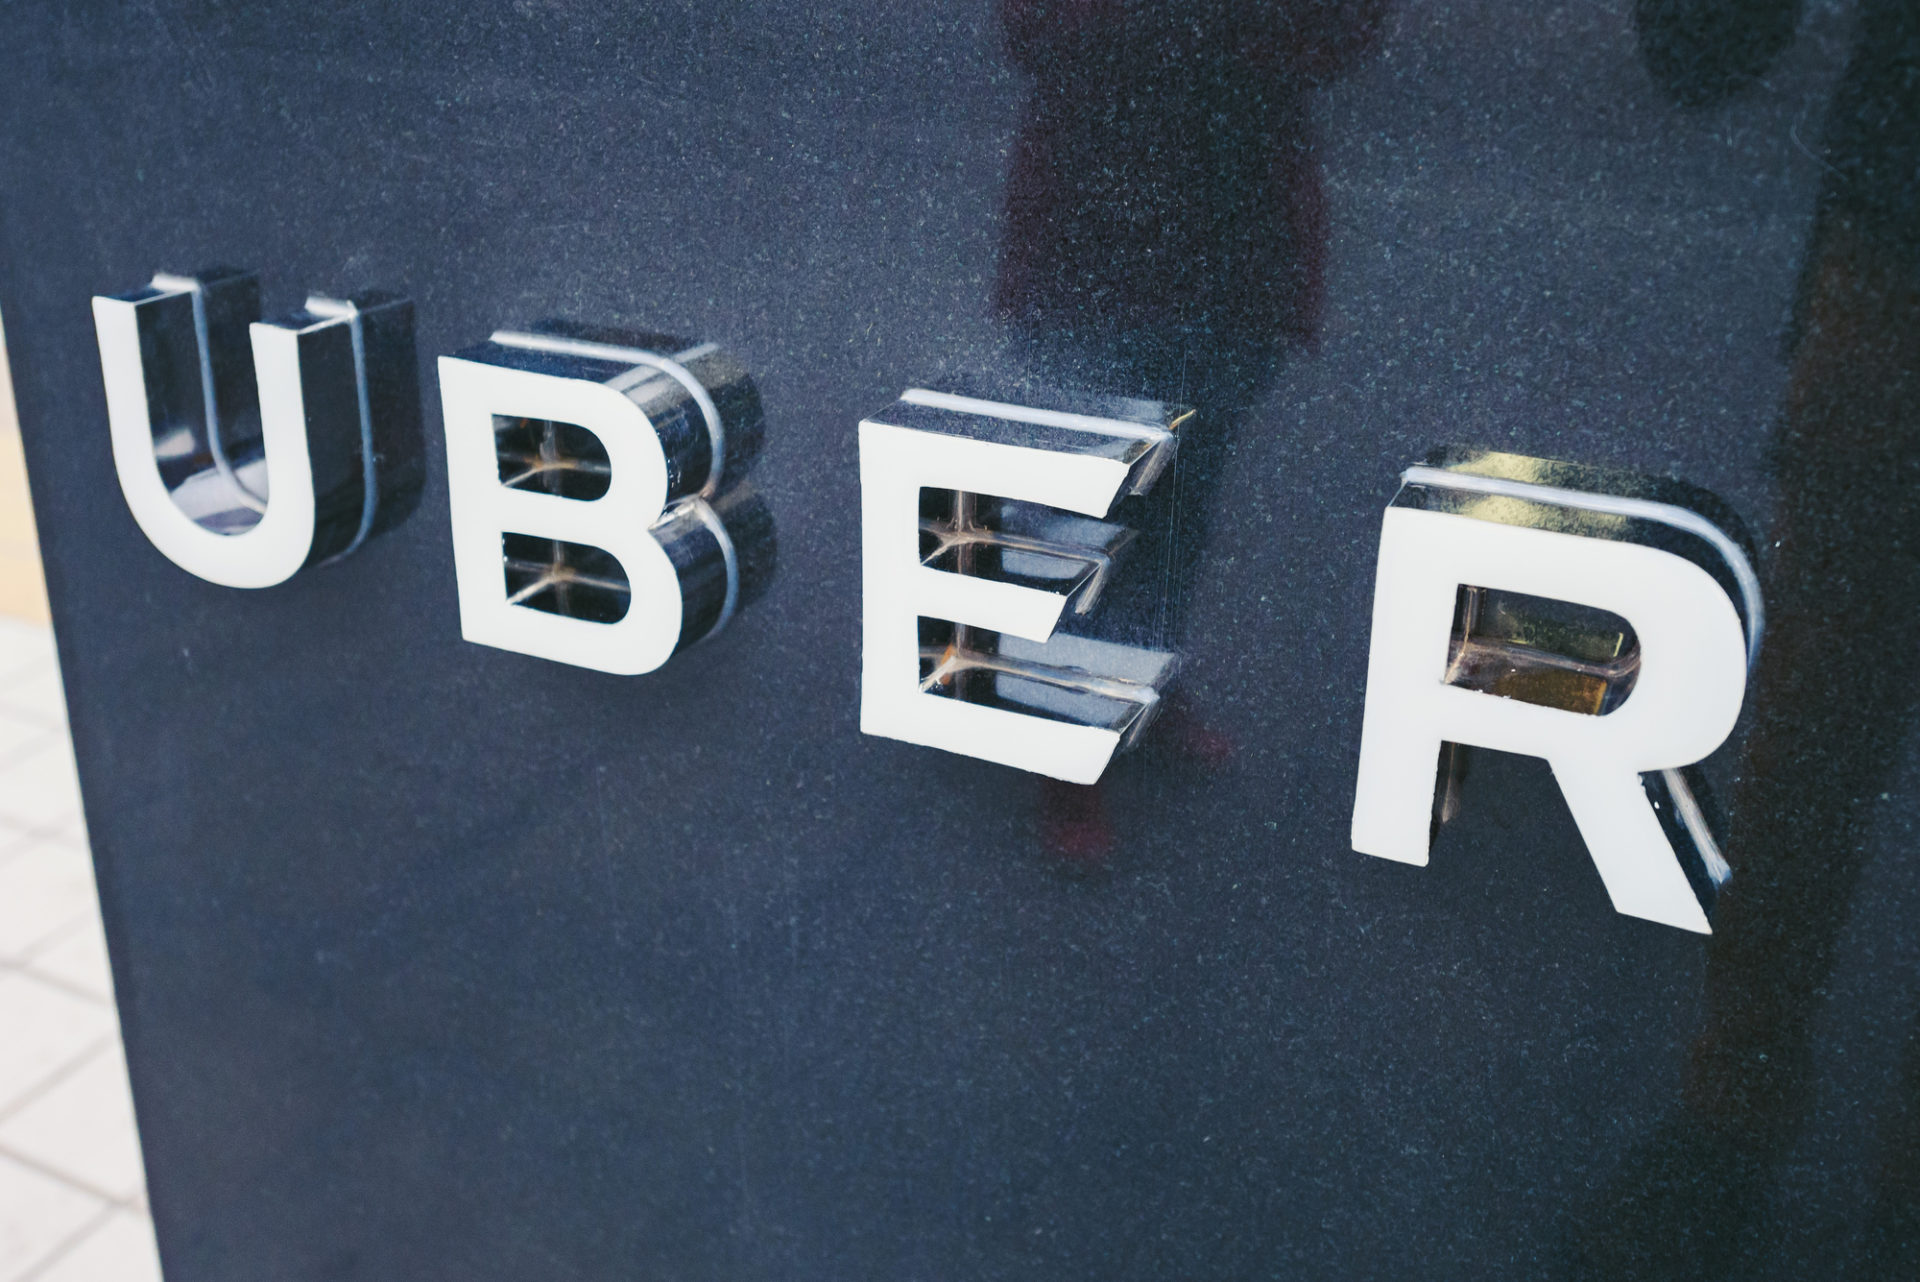 Uber’s departure from Colombia sparks debate over app regulation